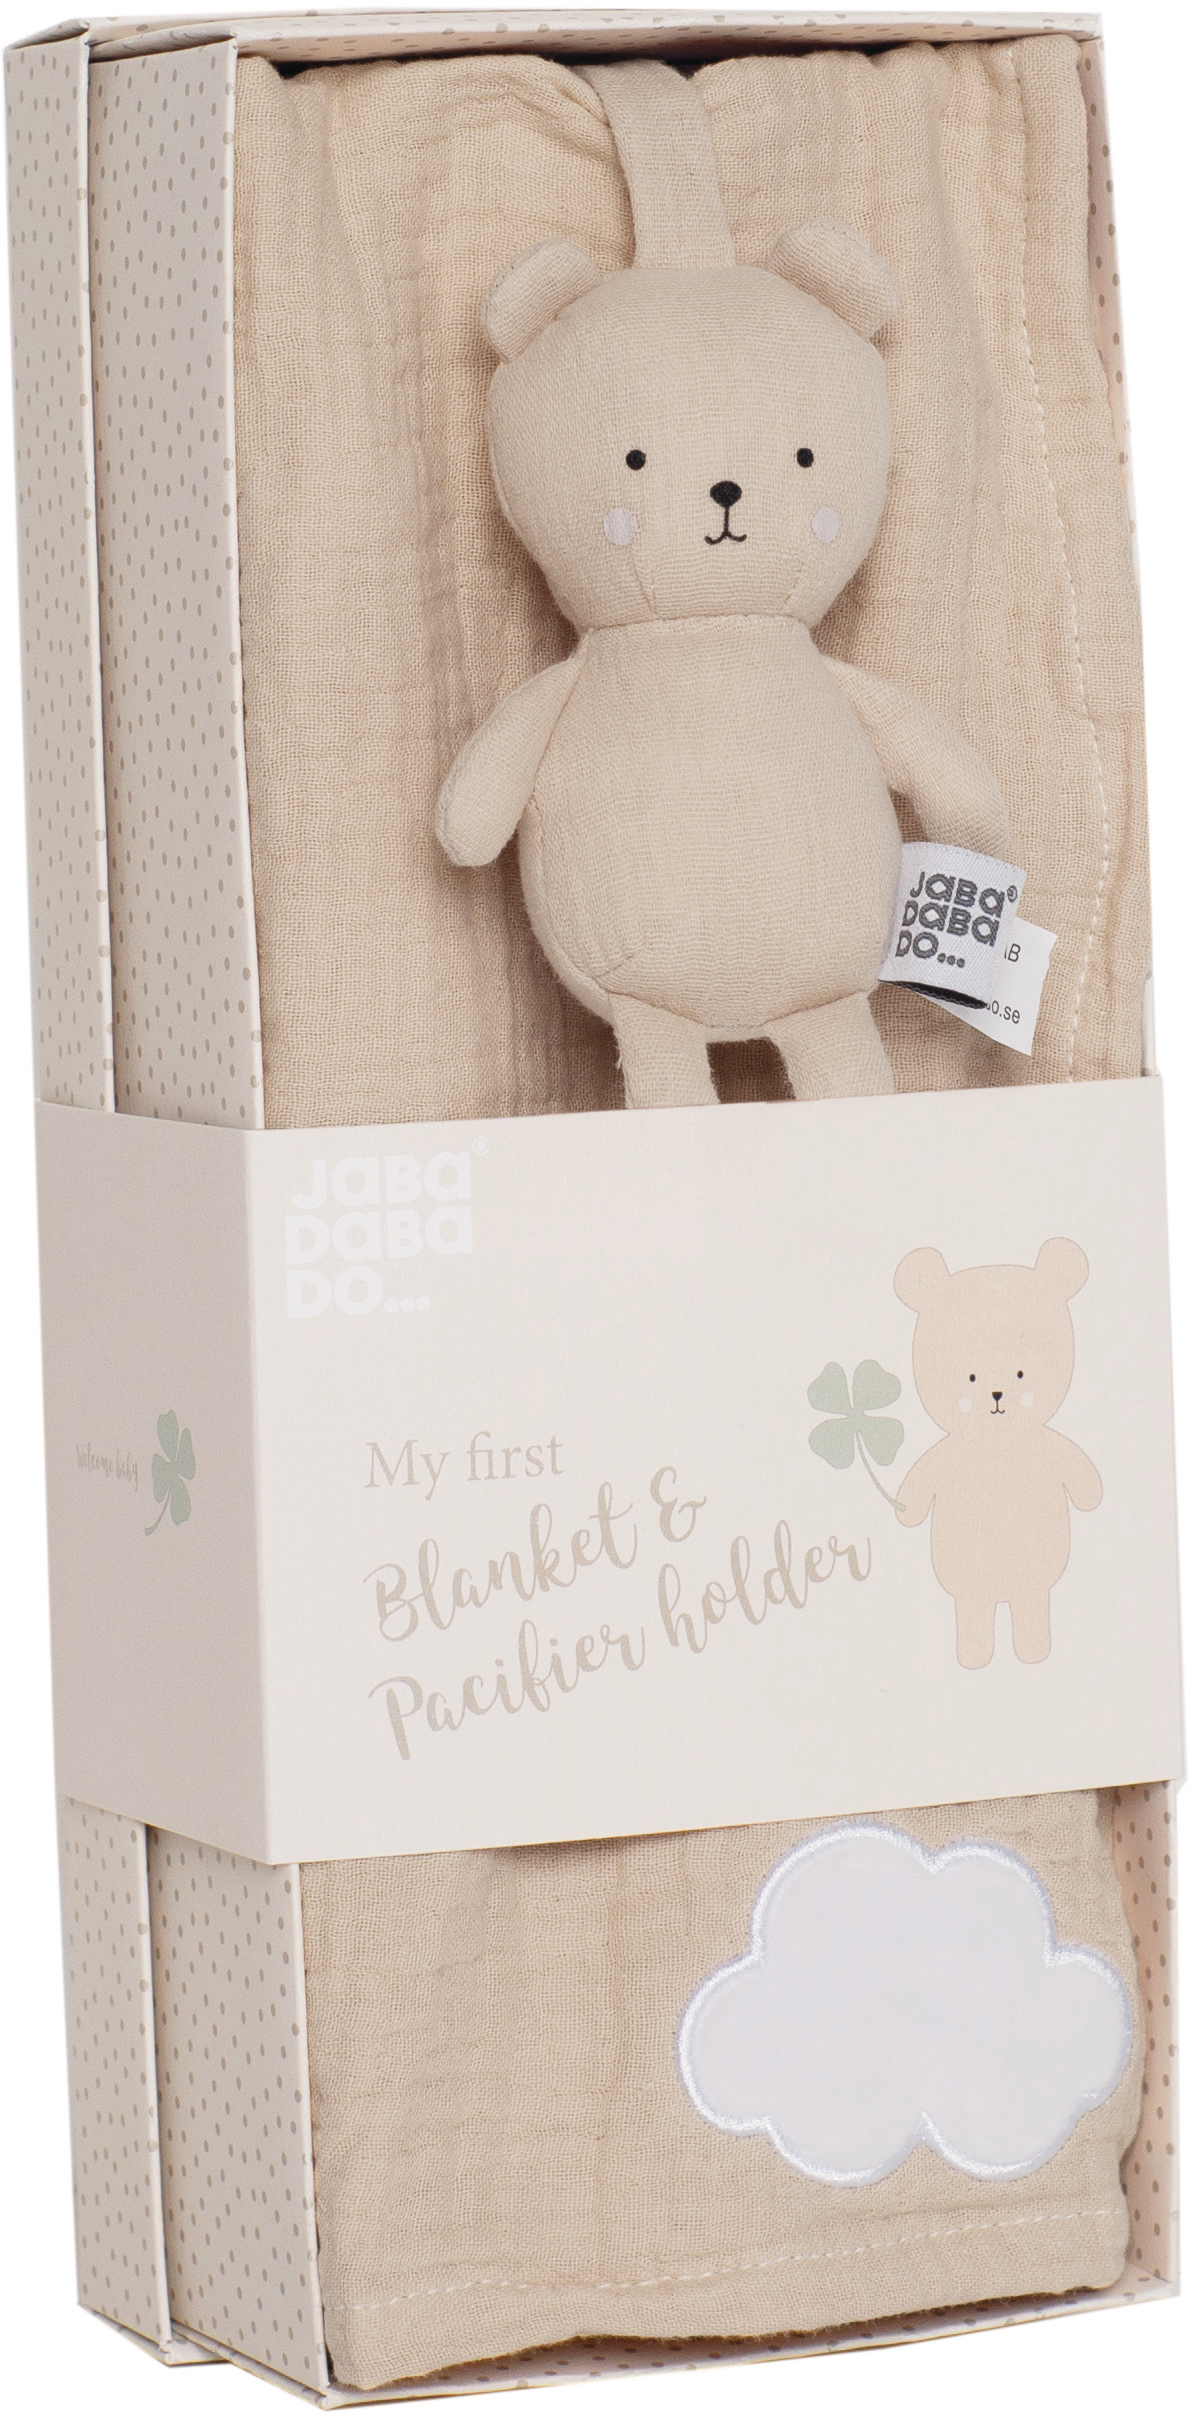 JABADABADO Gift kit buddy teddy N0183 beige, blanket, pacifier